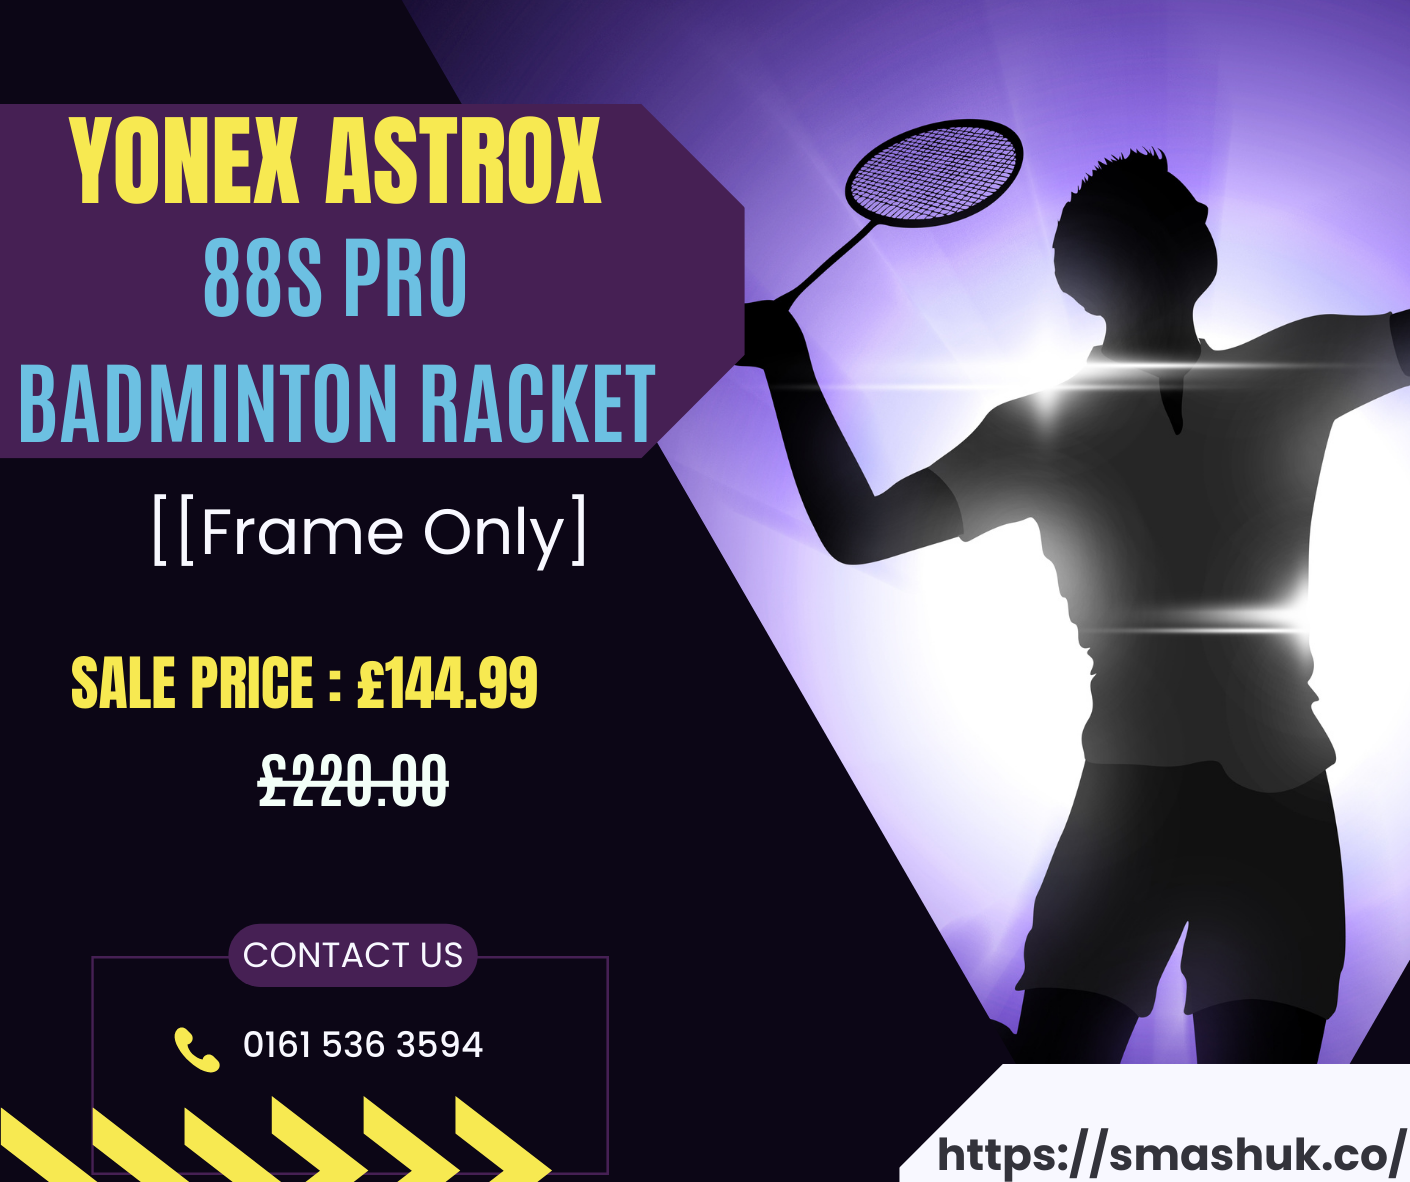 Yonex Astrox 88S PRO Badminton Racket- Features, Price & Offers